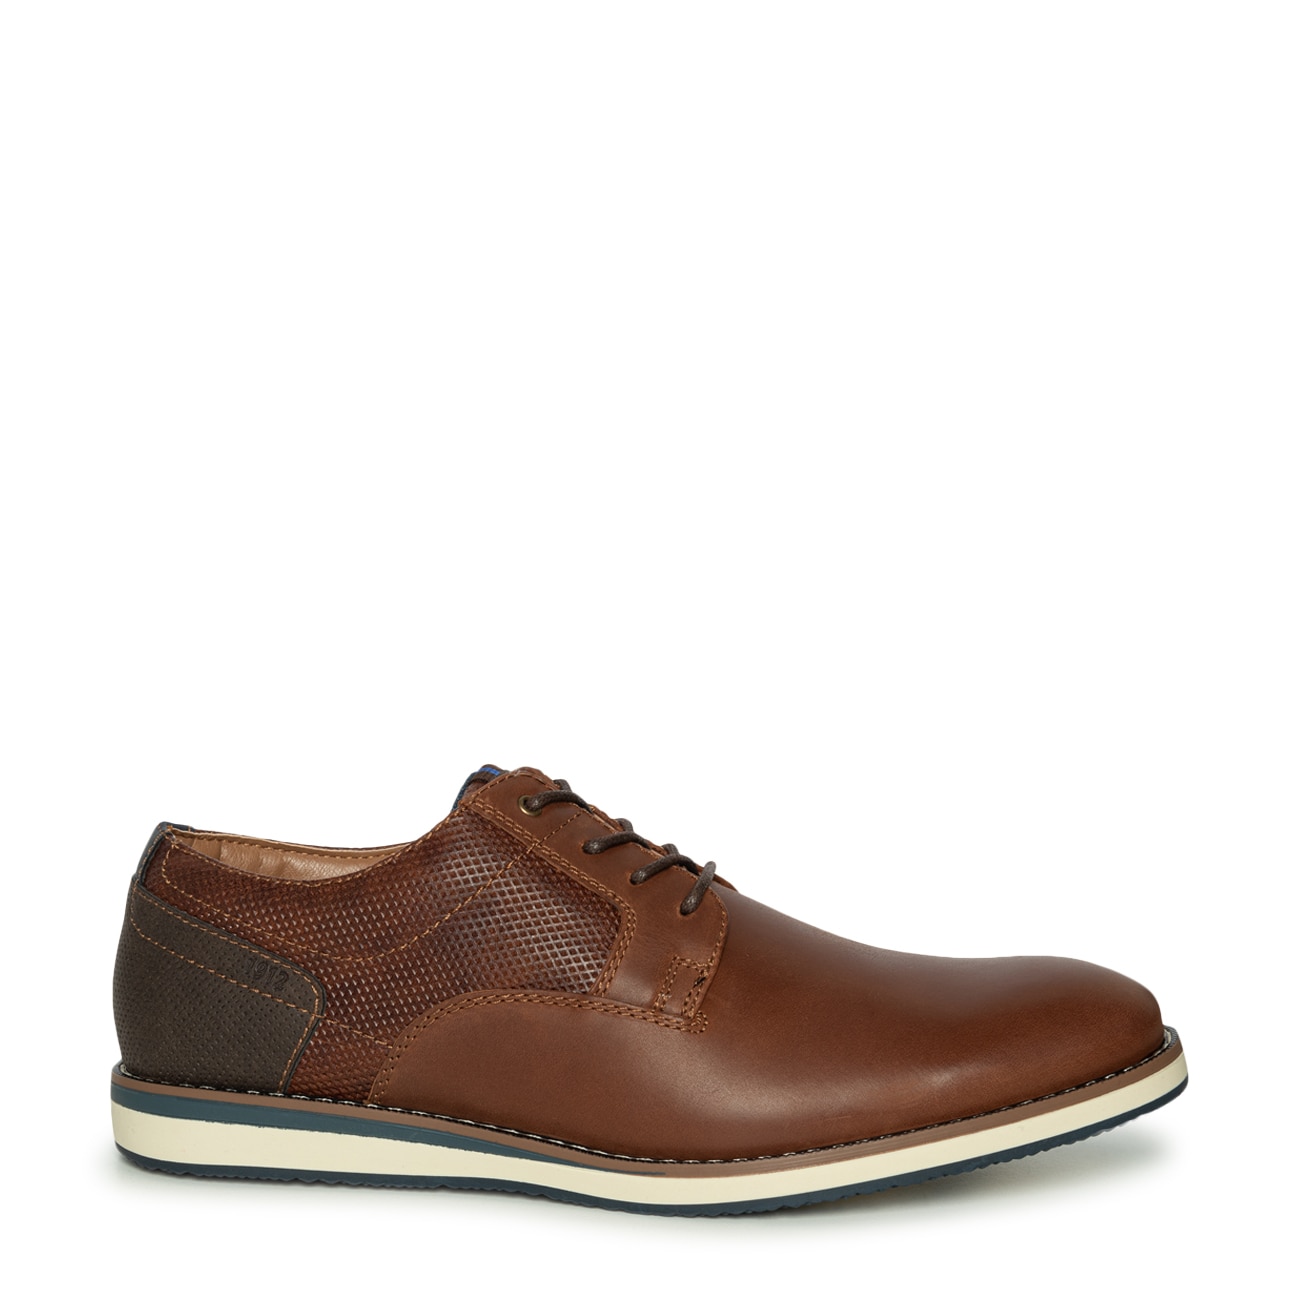 Nunn Bush Plain Toe Oxford | The Shoe Company